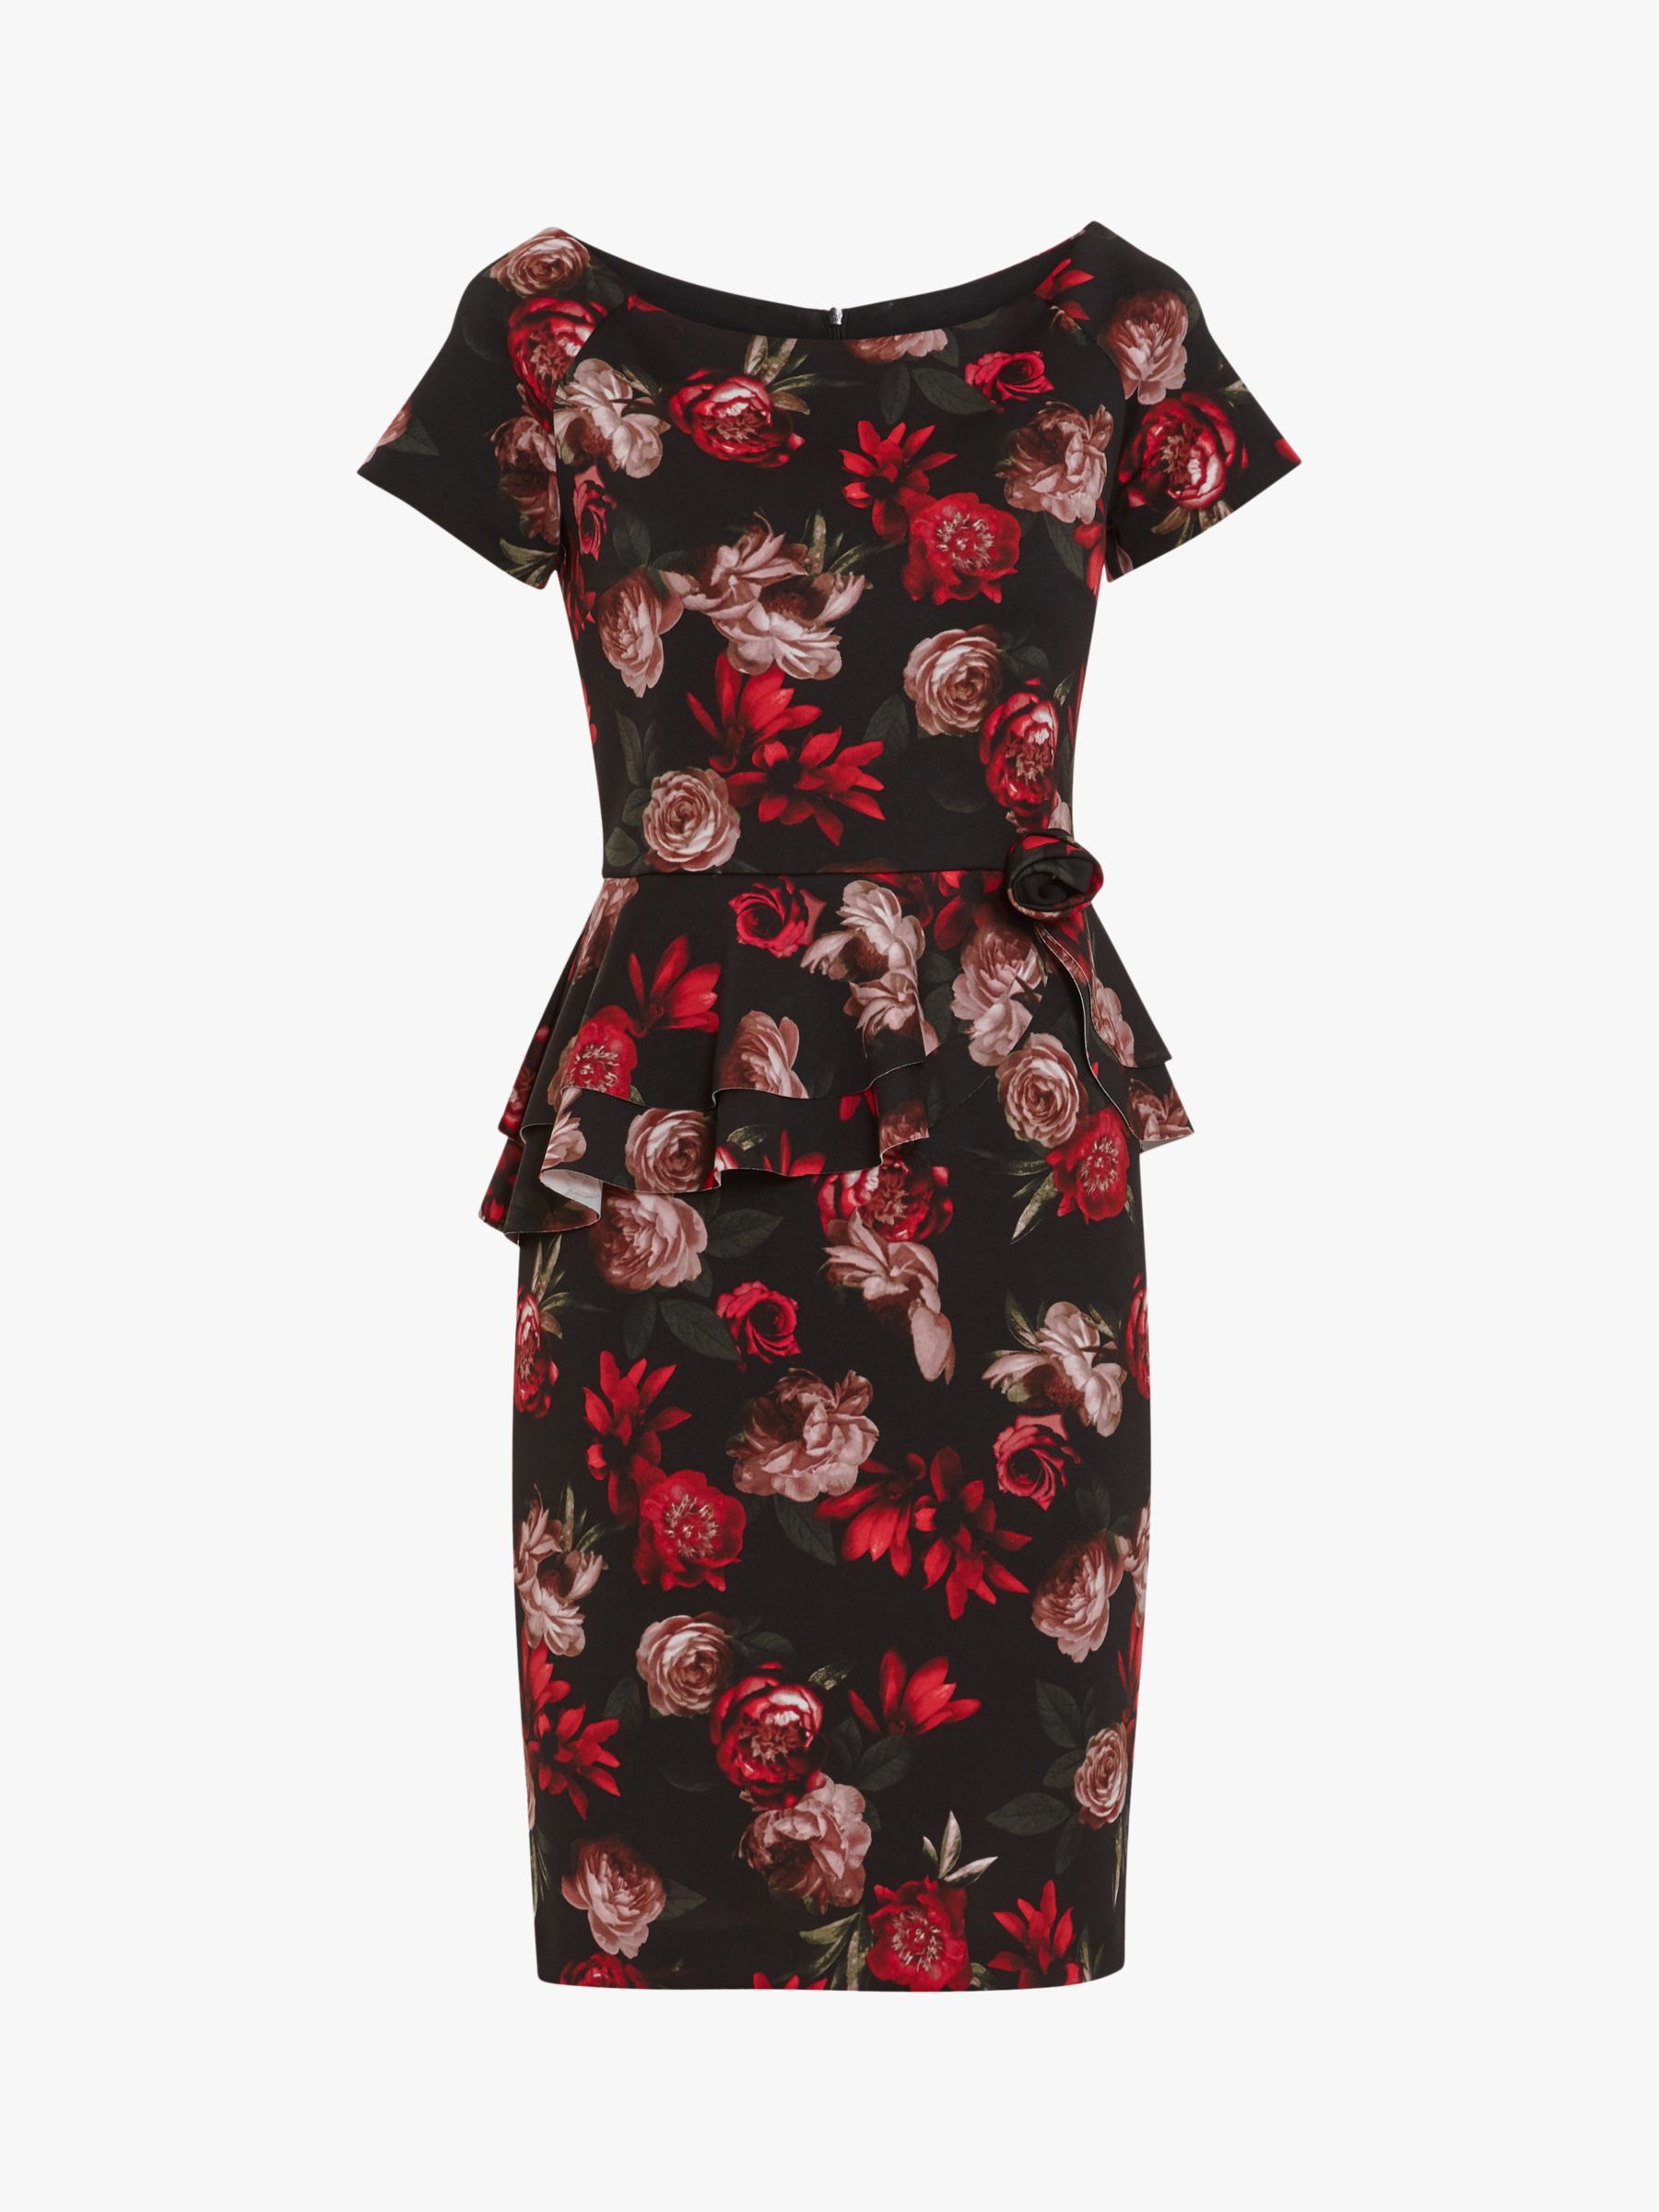 Buy Gina Bacconi Glorielle Floral Dress, Black/Red Online at johnlewis.com